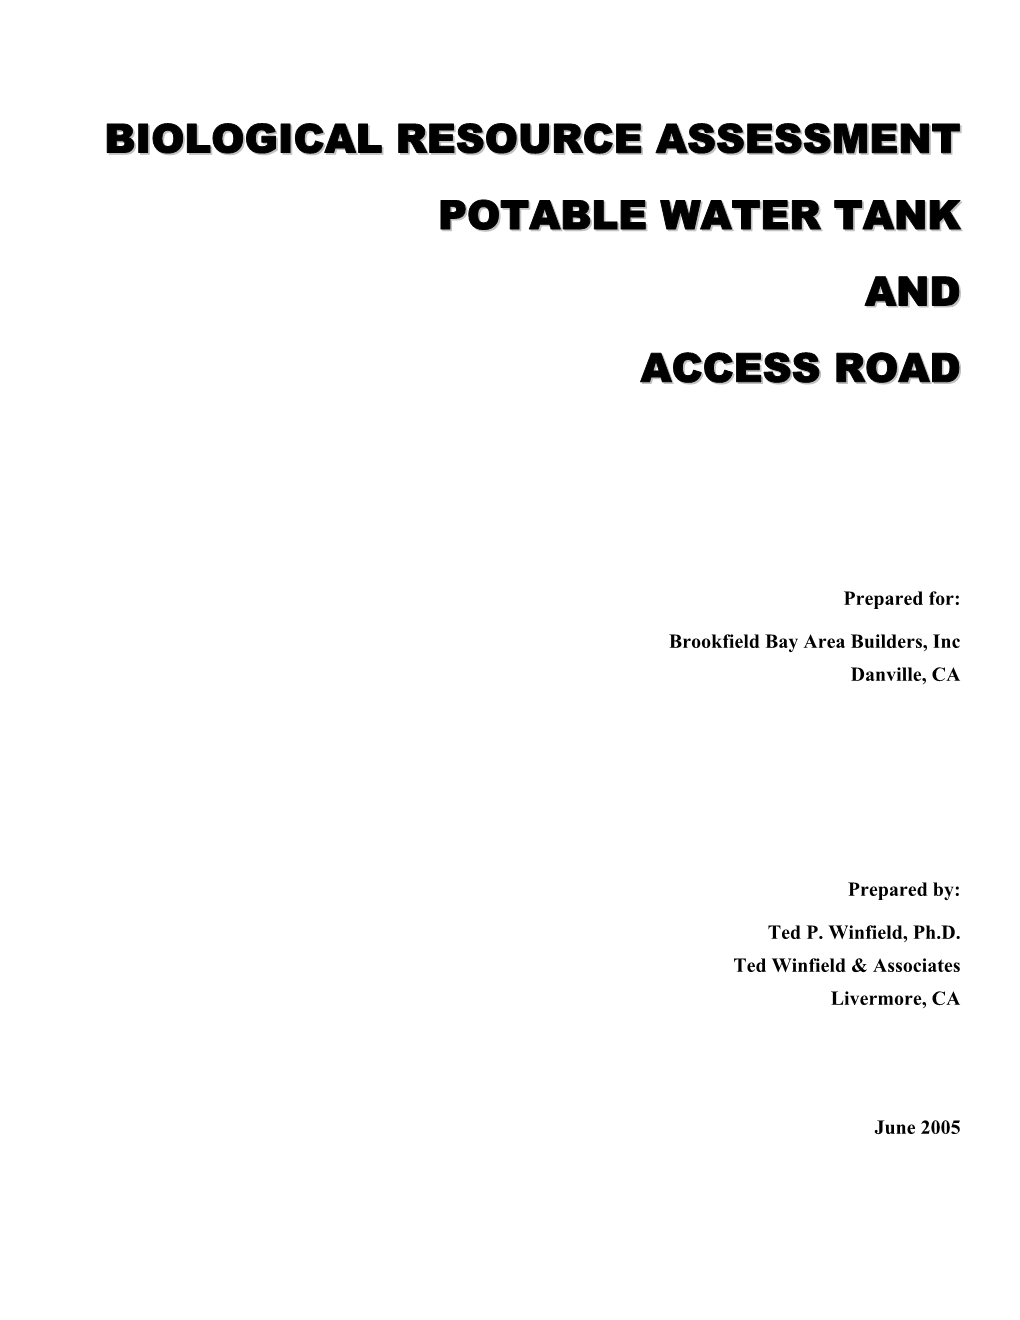 Biological Resource Assessment Potable Water